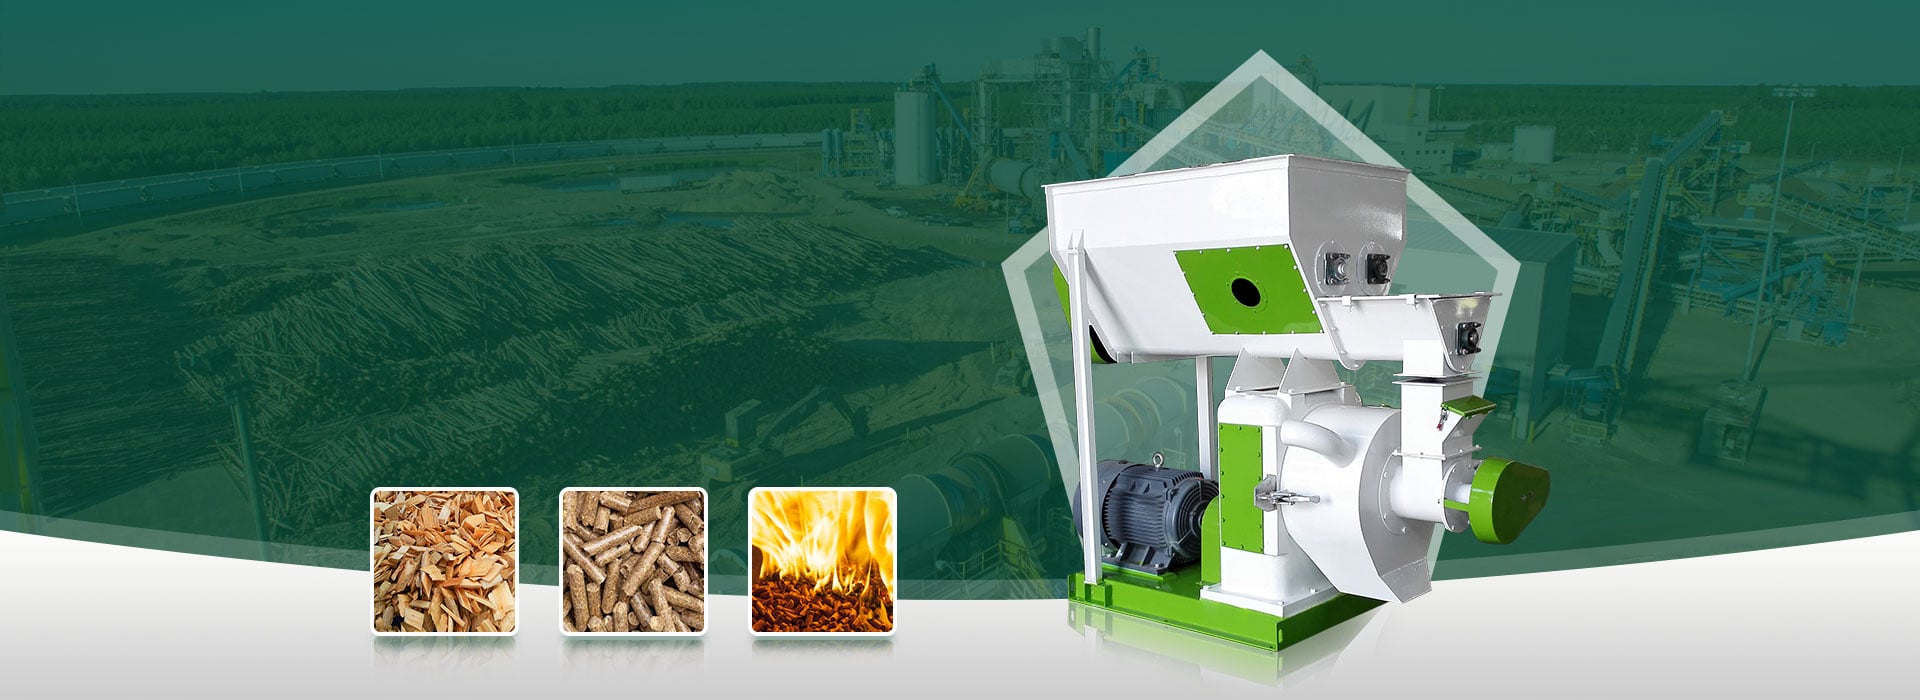 biomass-pellet-plants